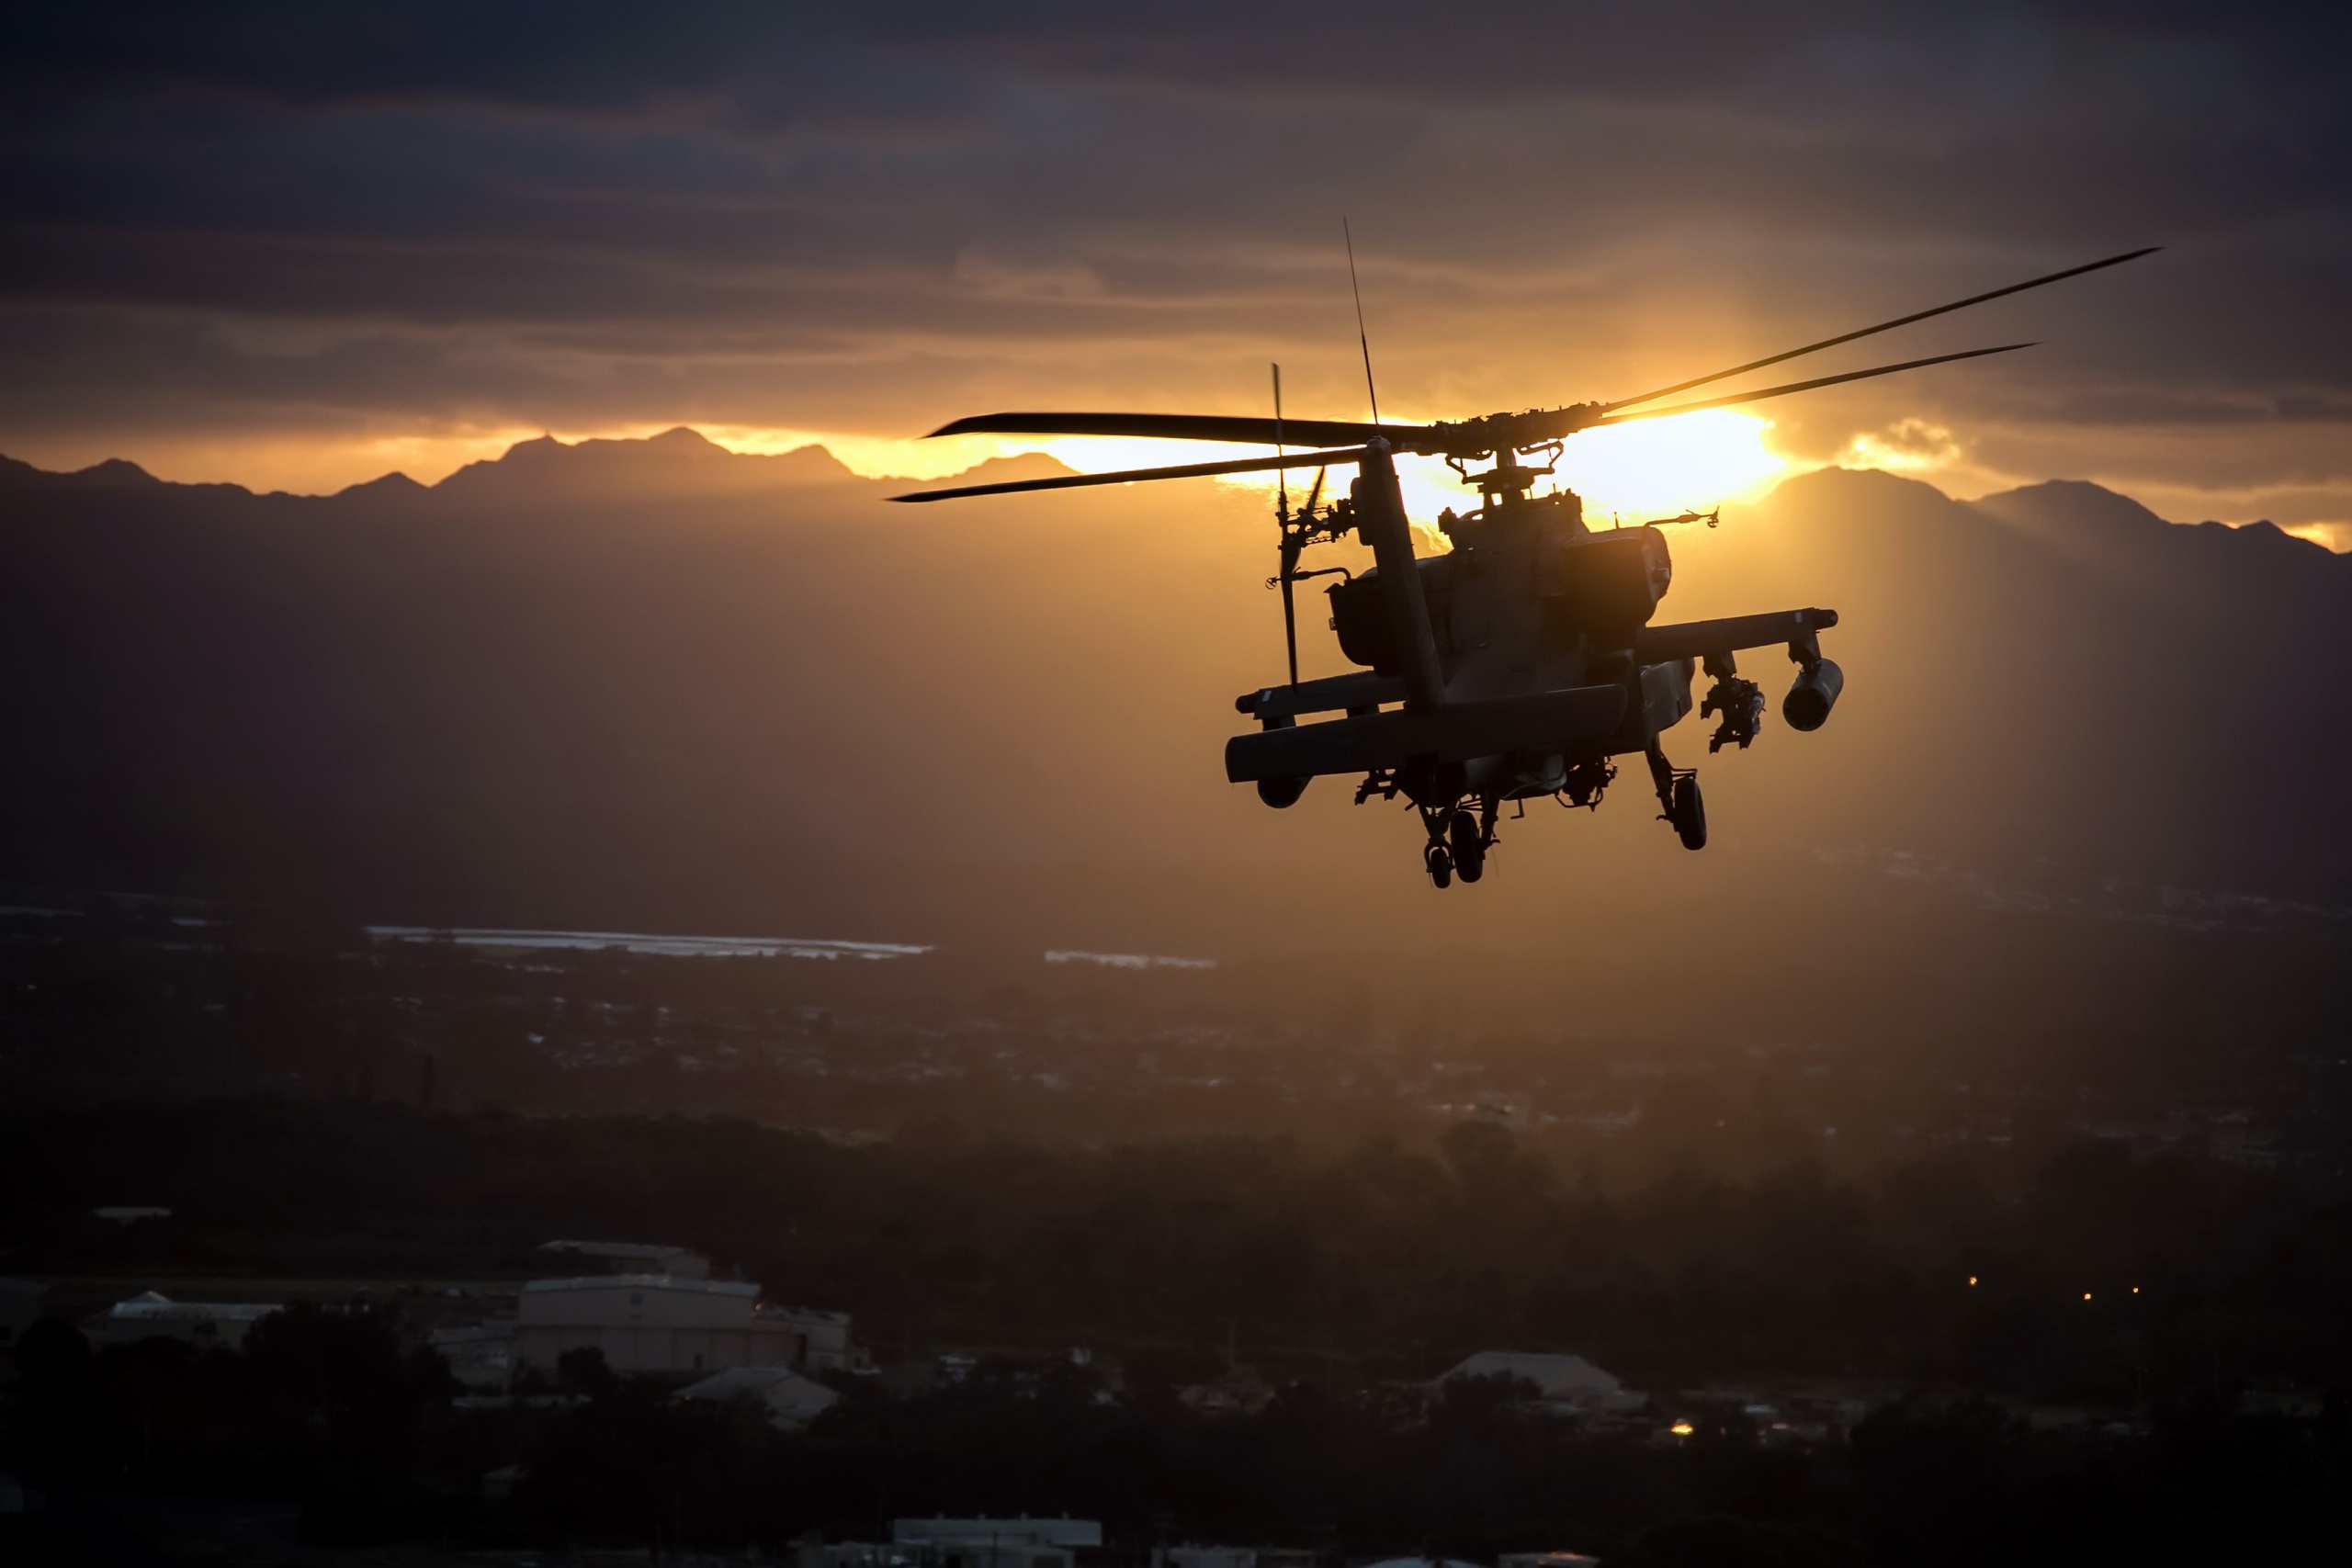 Baixe gratuitamente a imagem Helicóptero, Militar, Aeronaves, Boeing Ah 64 Apache, Helicóptero De Ataque na área de trabalho do seu PC